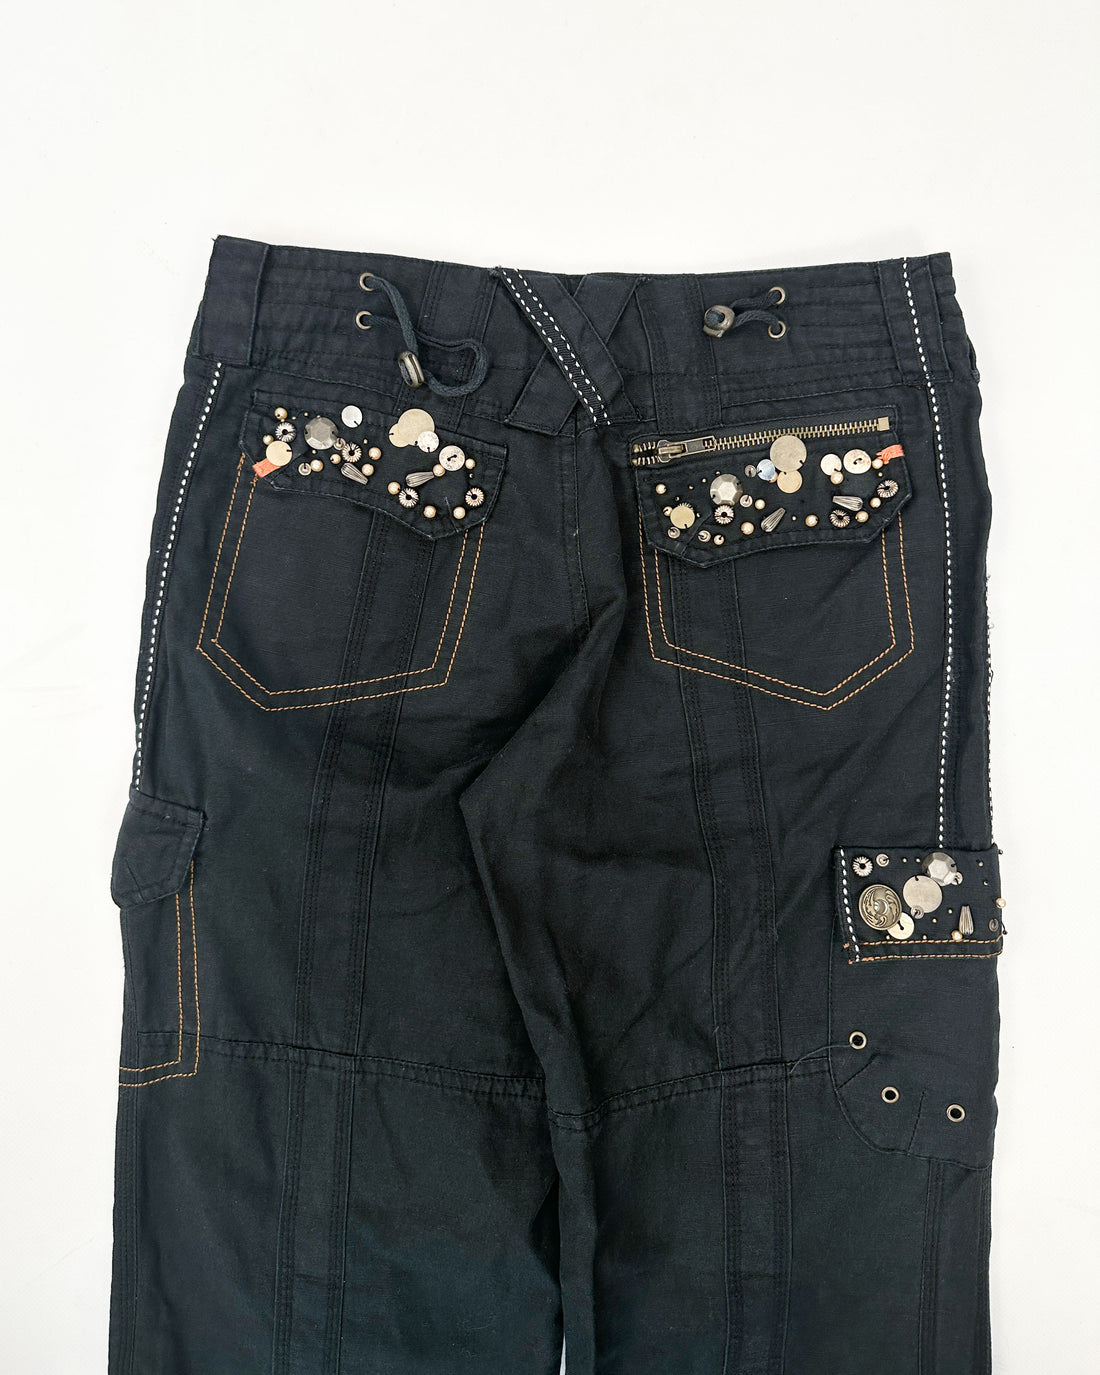 DKNY Decorated Black Cargo Pants 90's